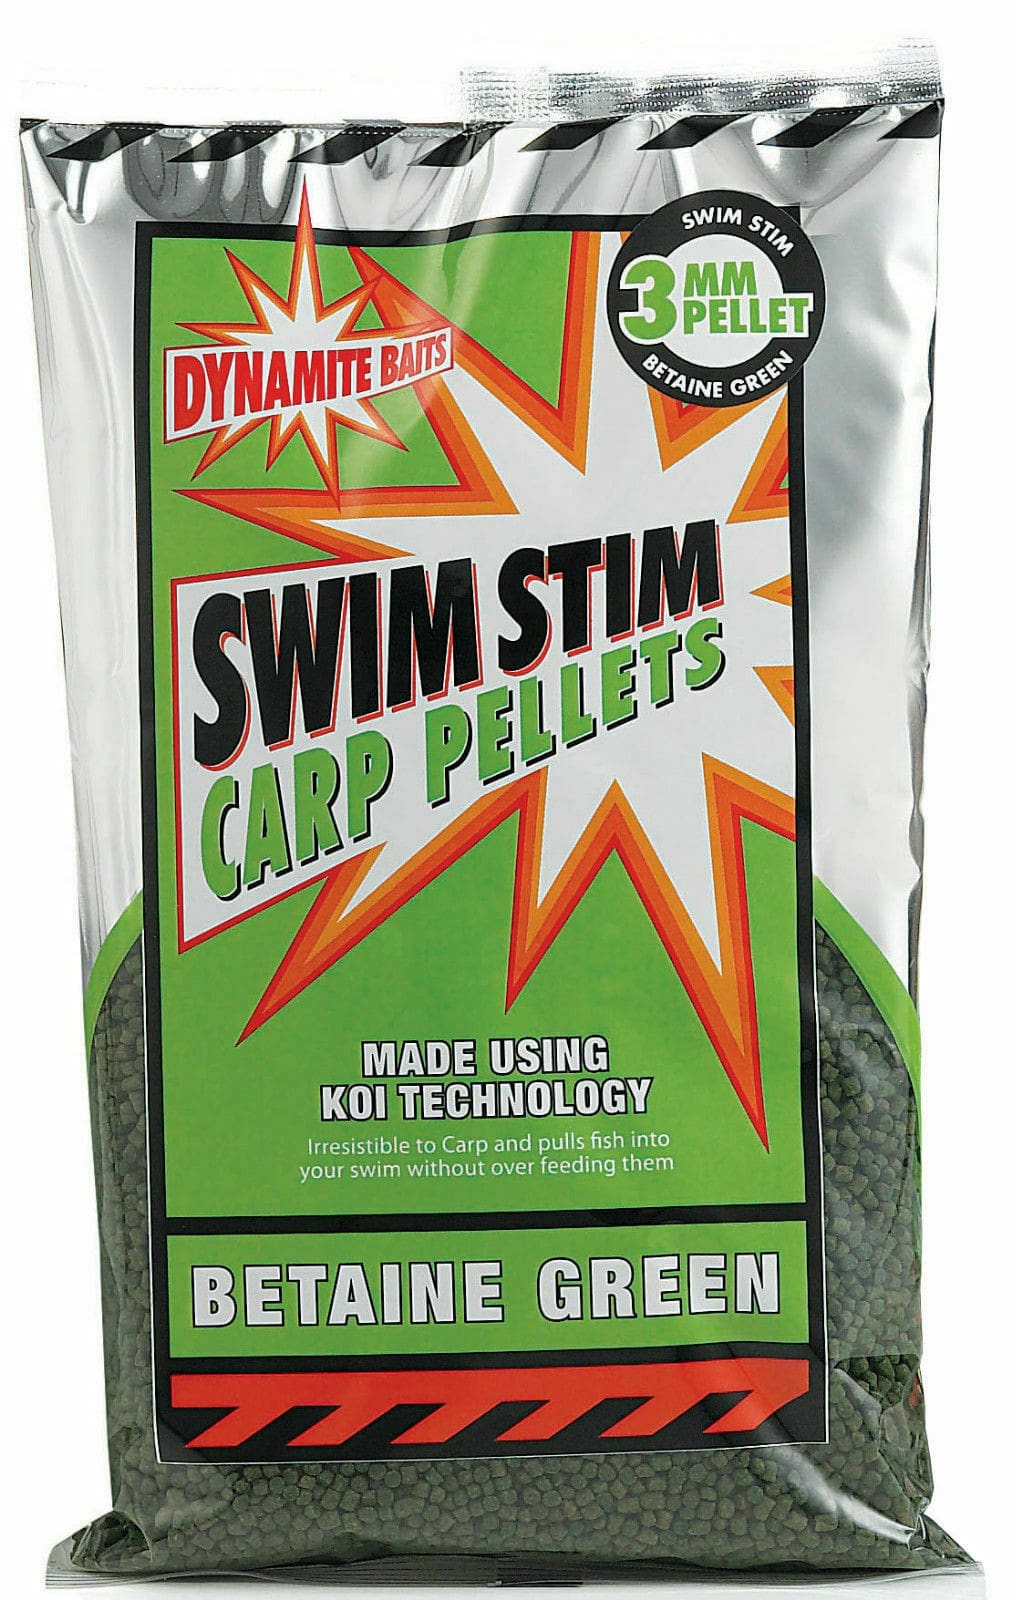 Dynamite baits swim stim carp pellets 3mm